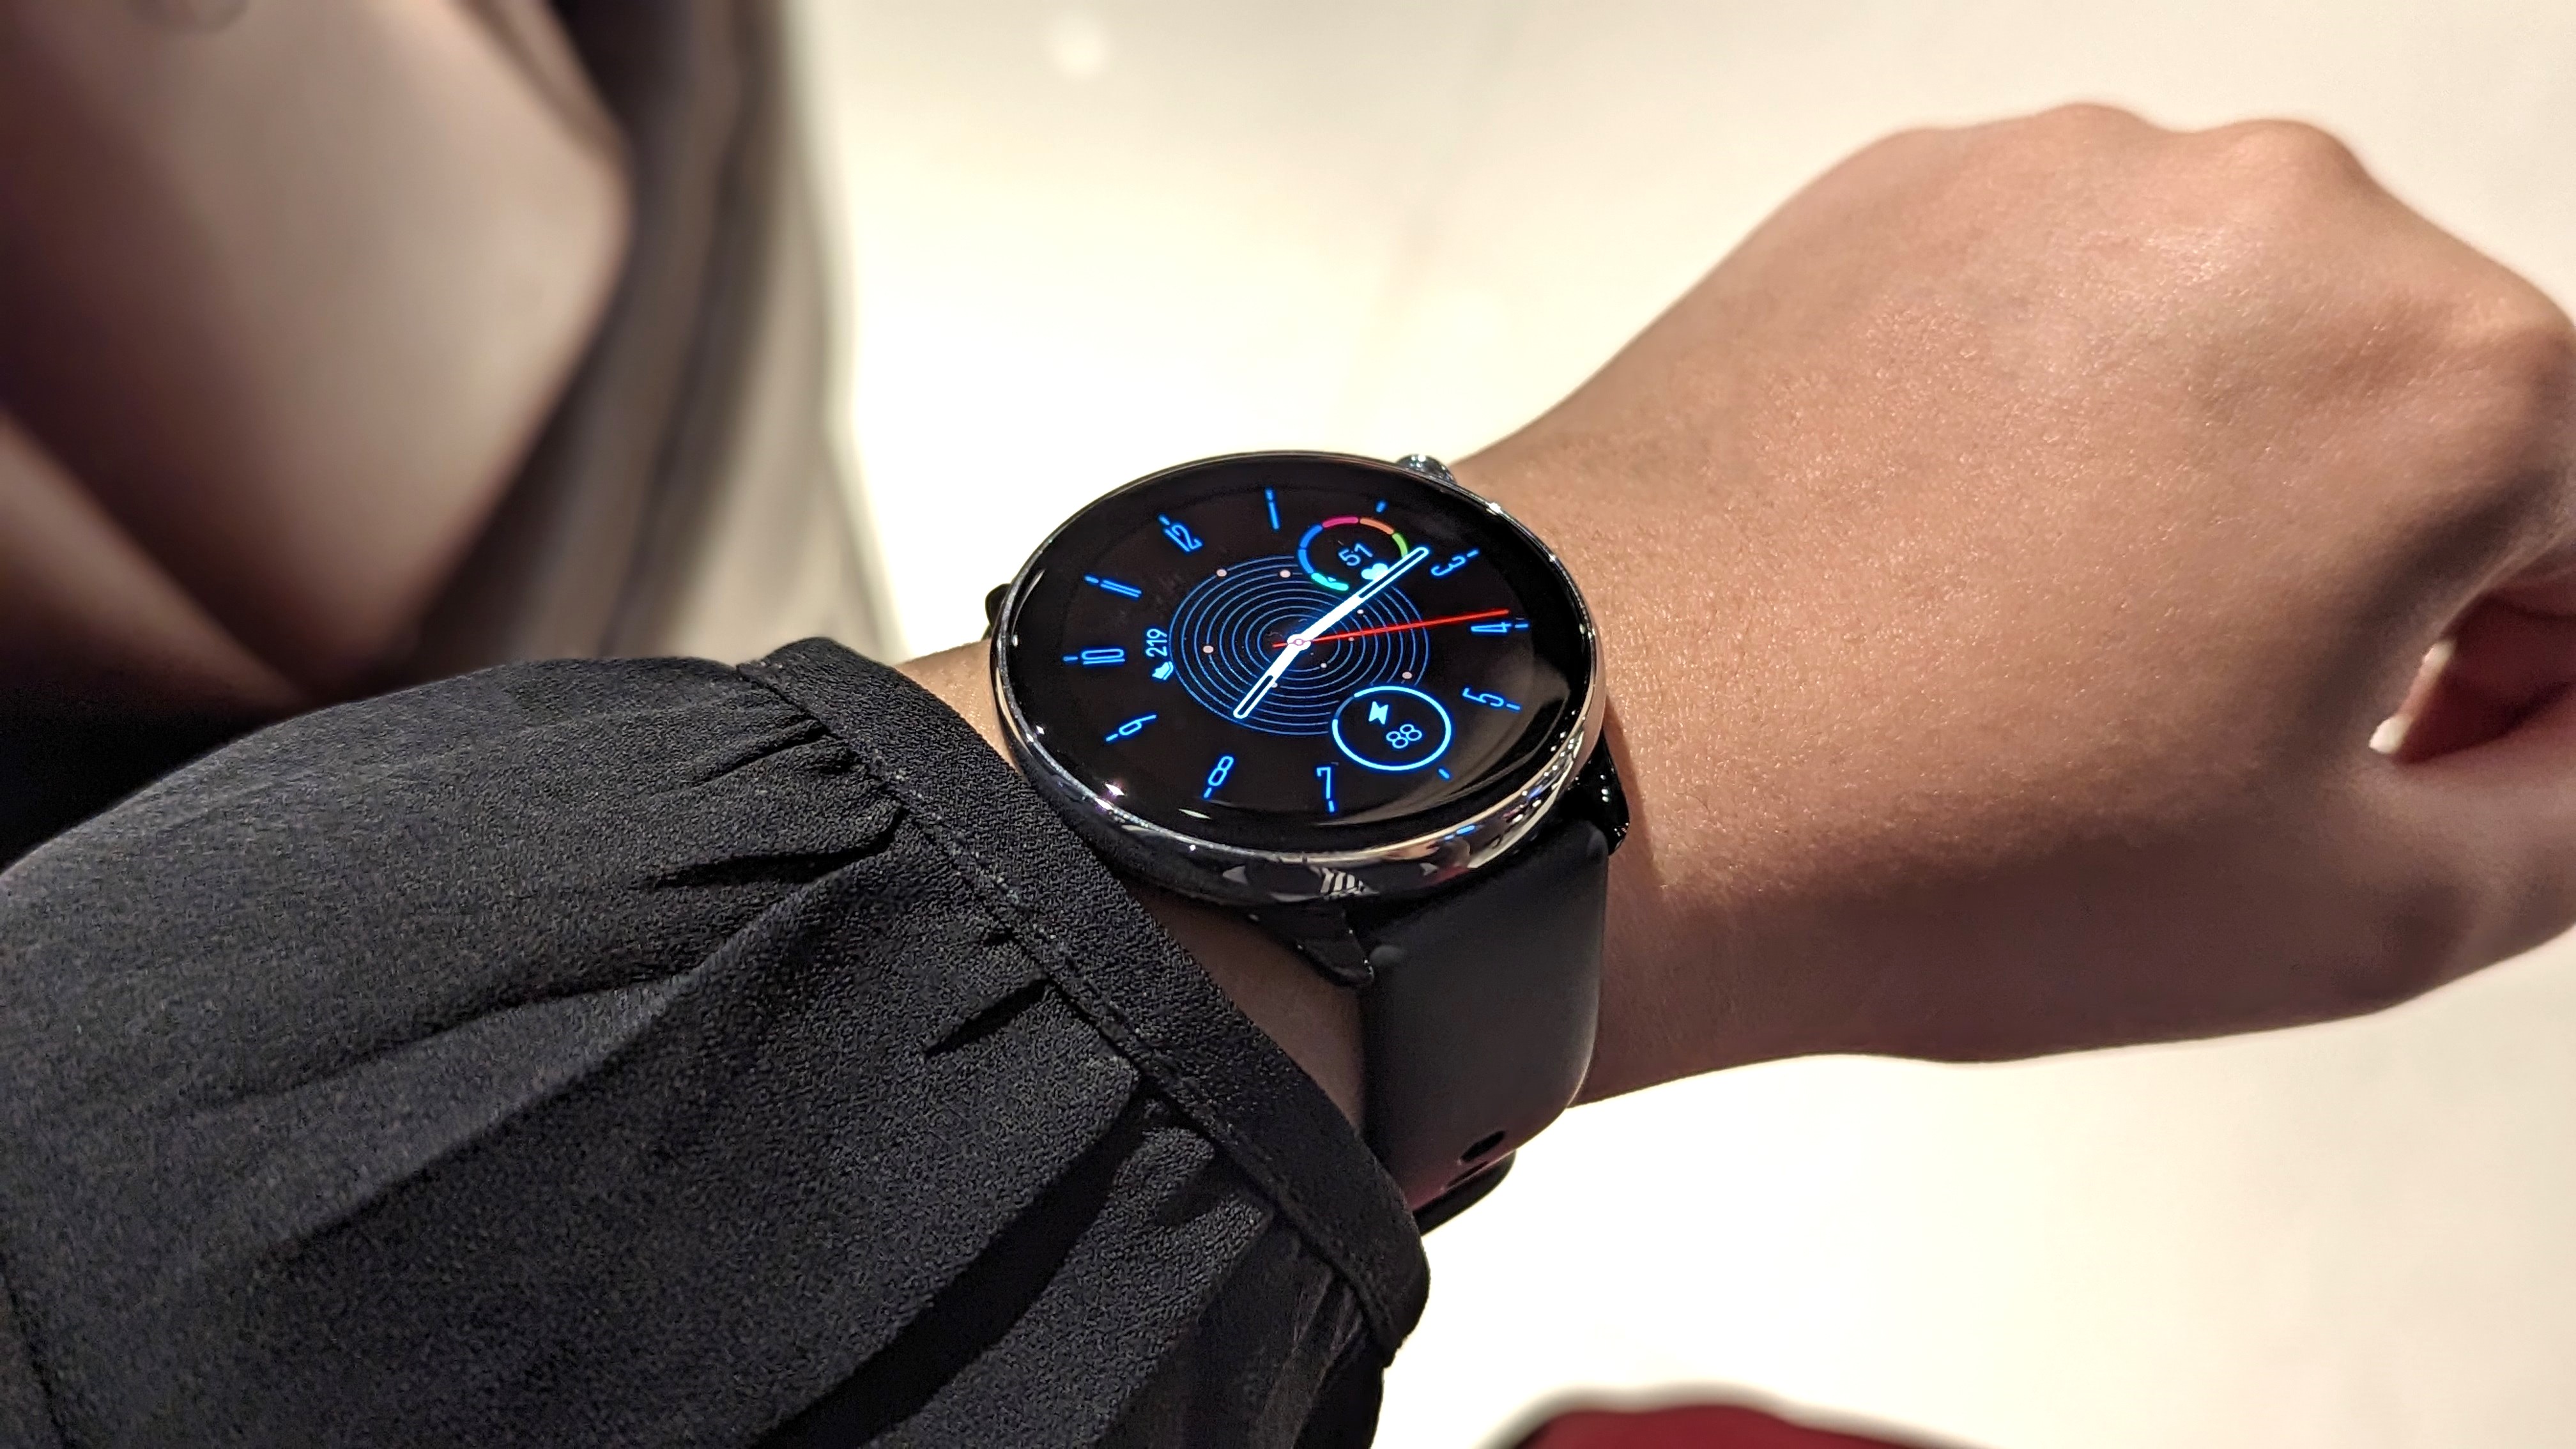 Amazfit GTR Mini smartwatch worn on a wrist, showcasing the basic watch face.